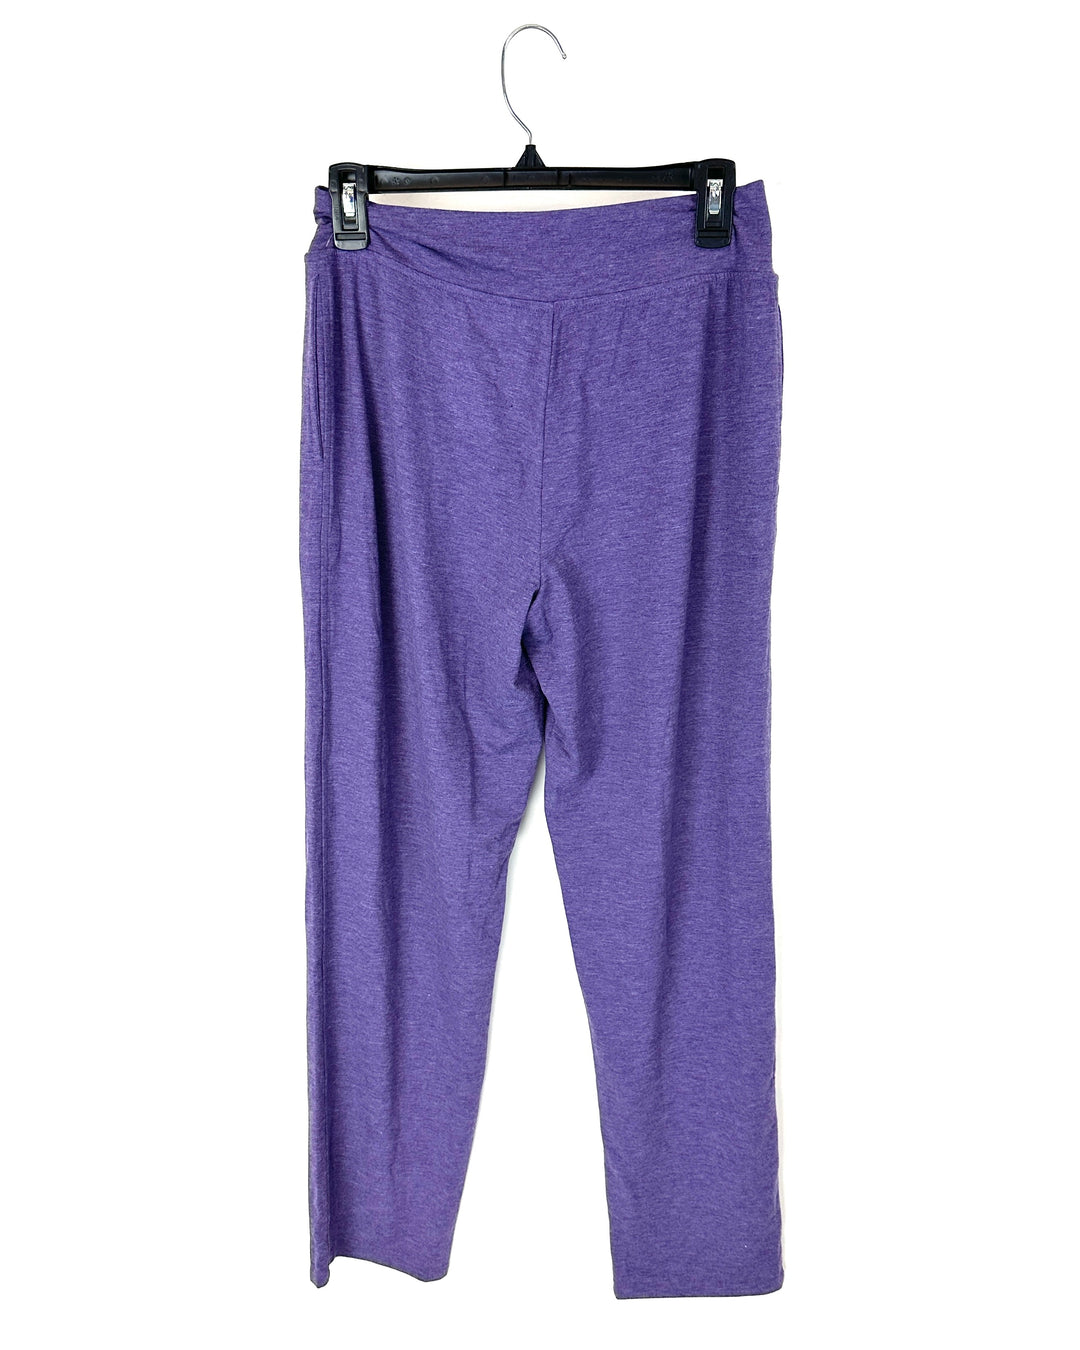 Purple Pants - Size 4/6